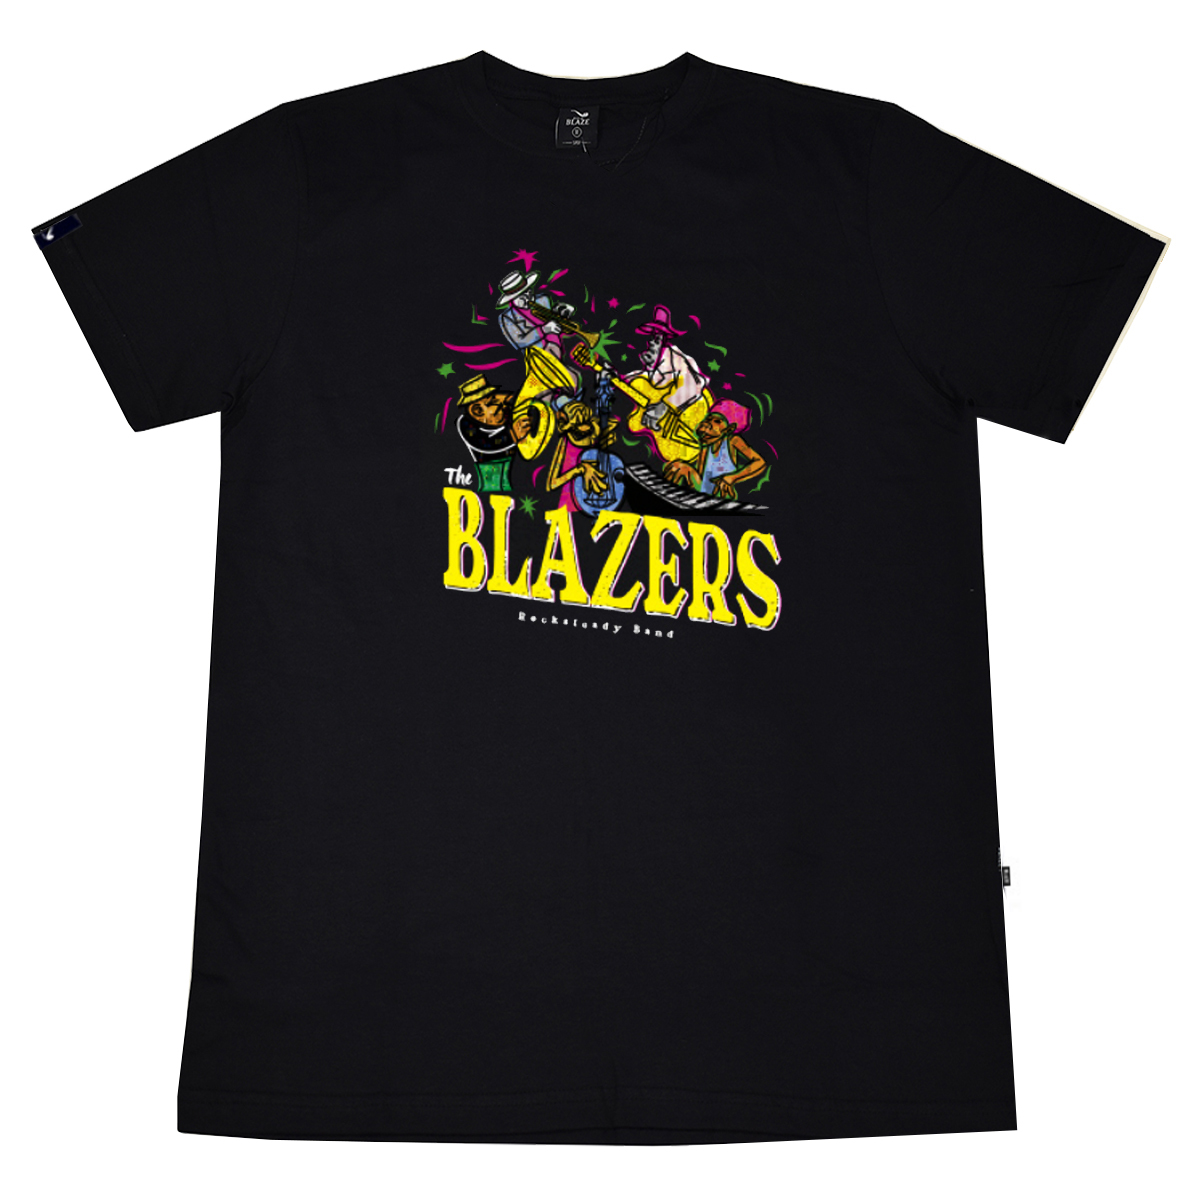 Camiseta Blaze The Blazers Black